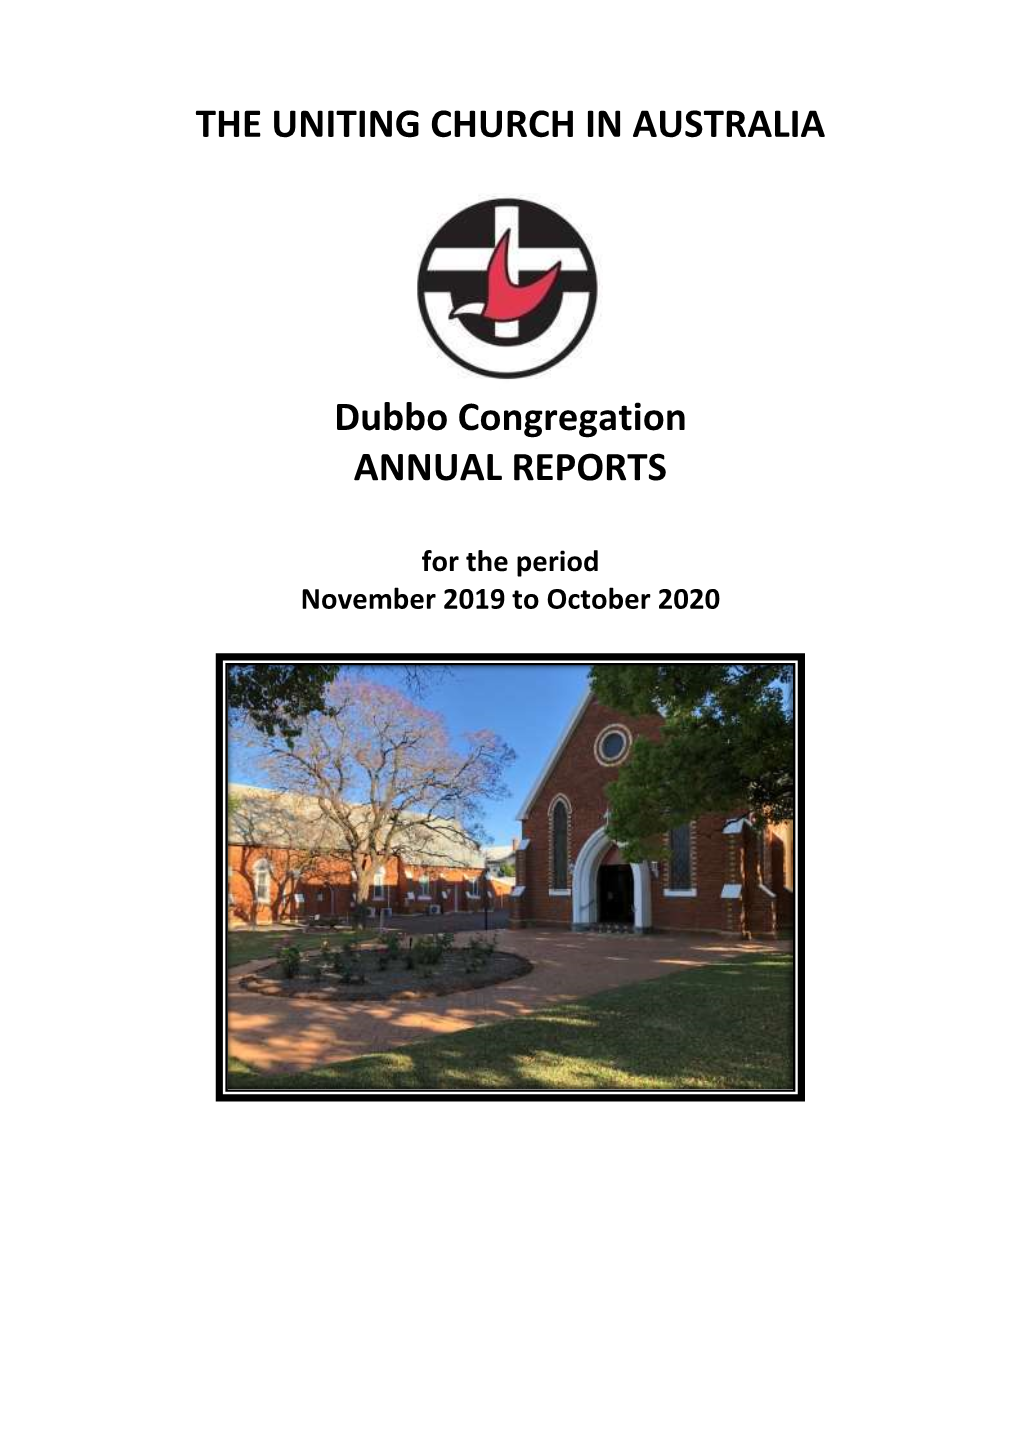 THE UNITING CHURCH in AUSTRALIA Dubbo Congregation